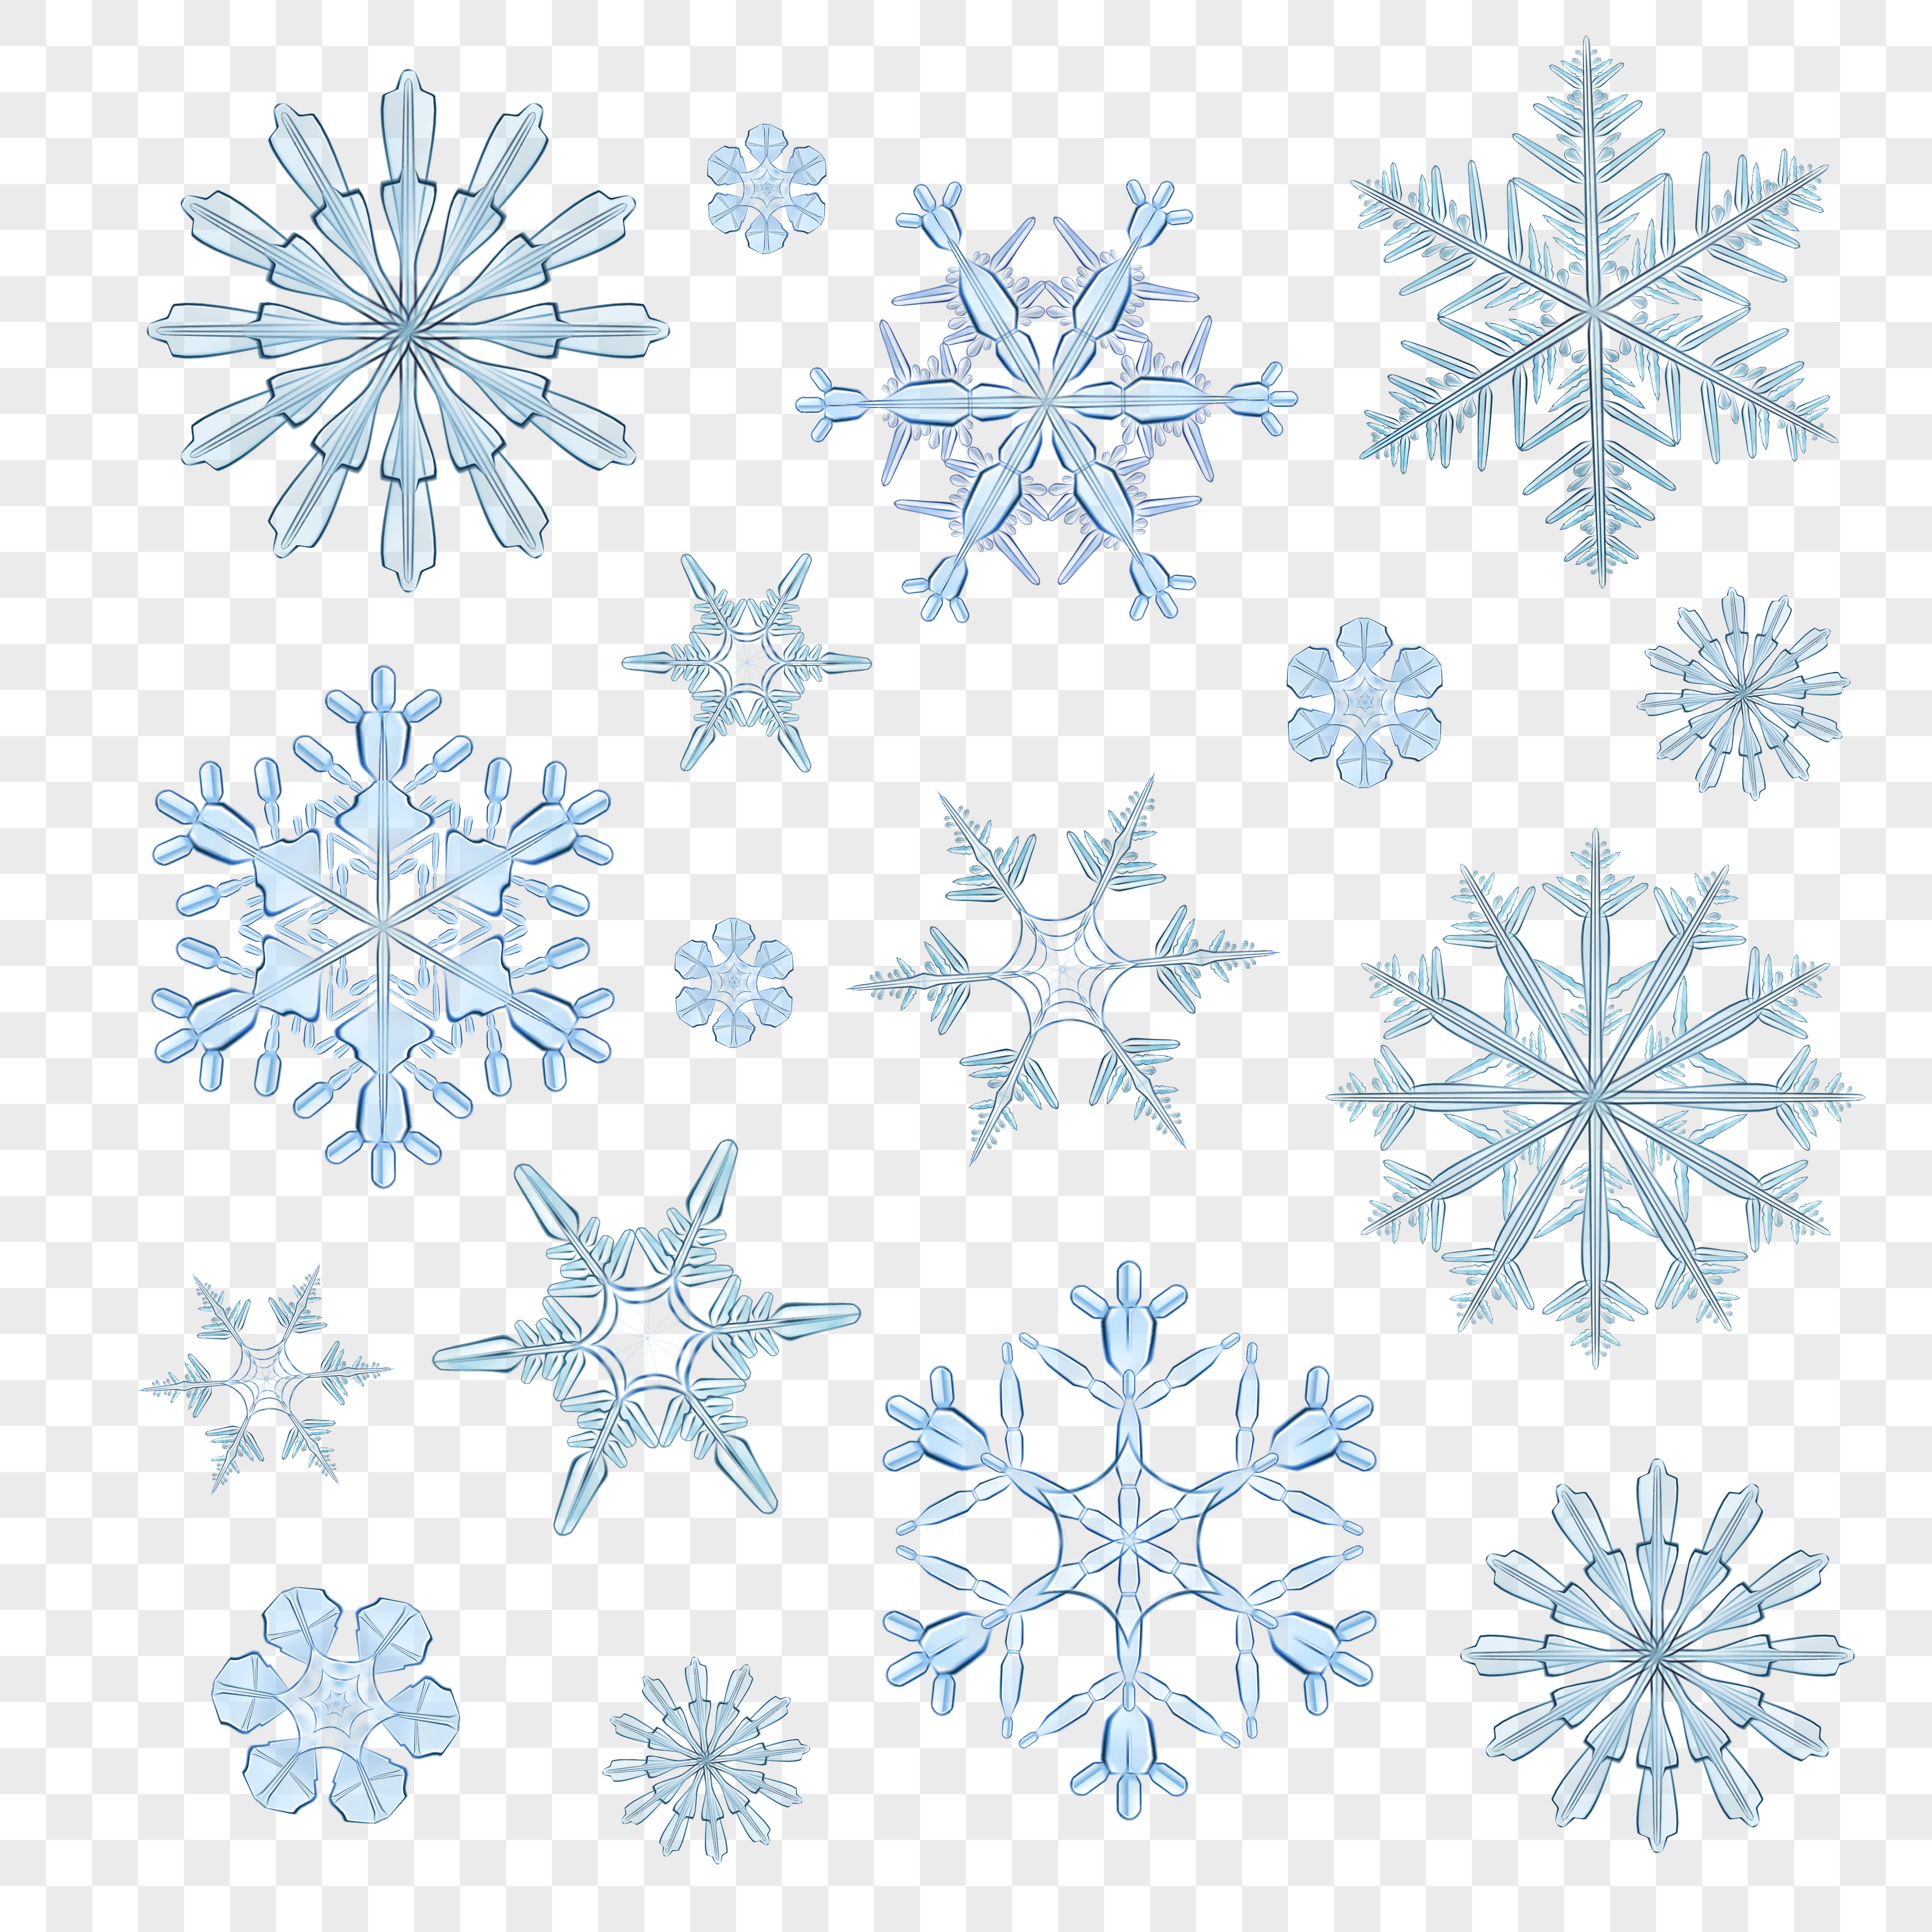 Download Snowflakes transparent blue 484751 - Download Free Vectors ...